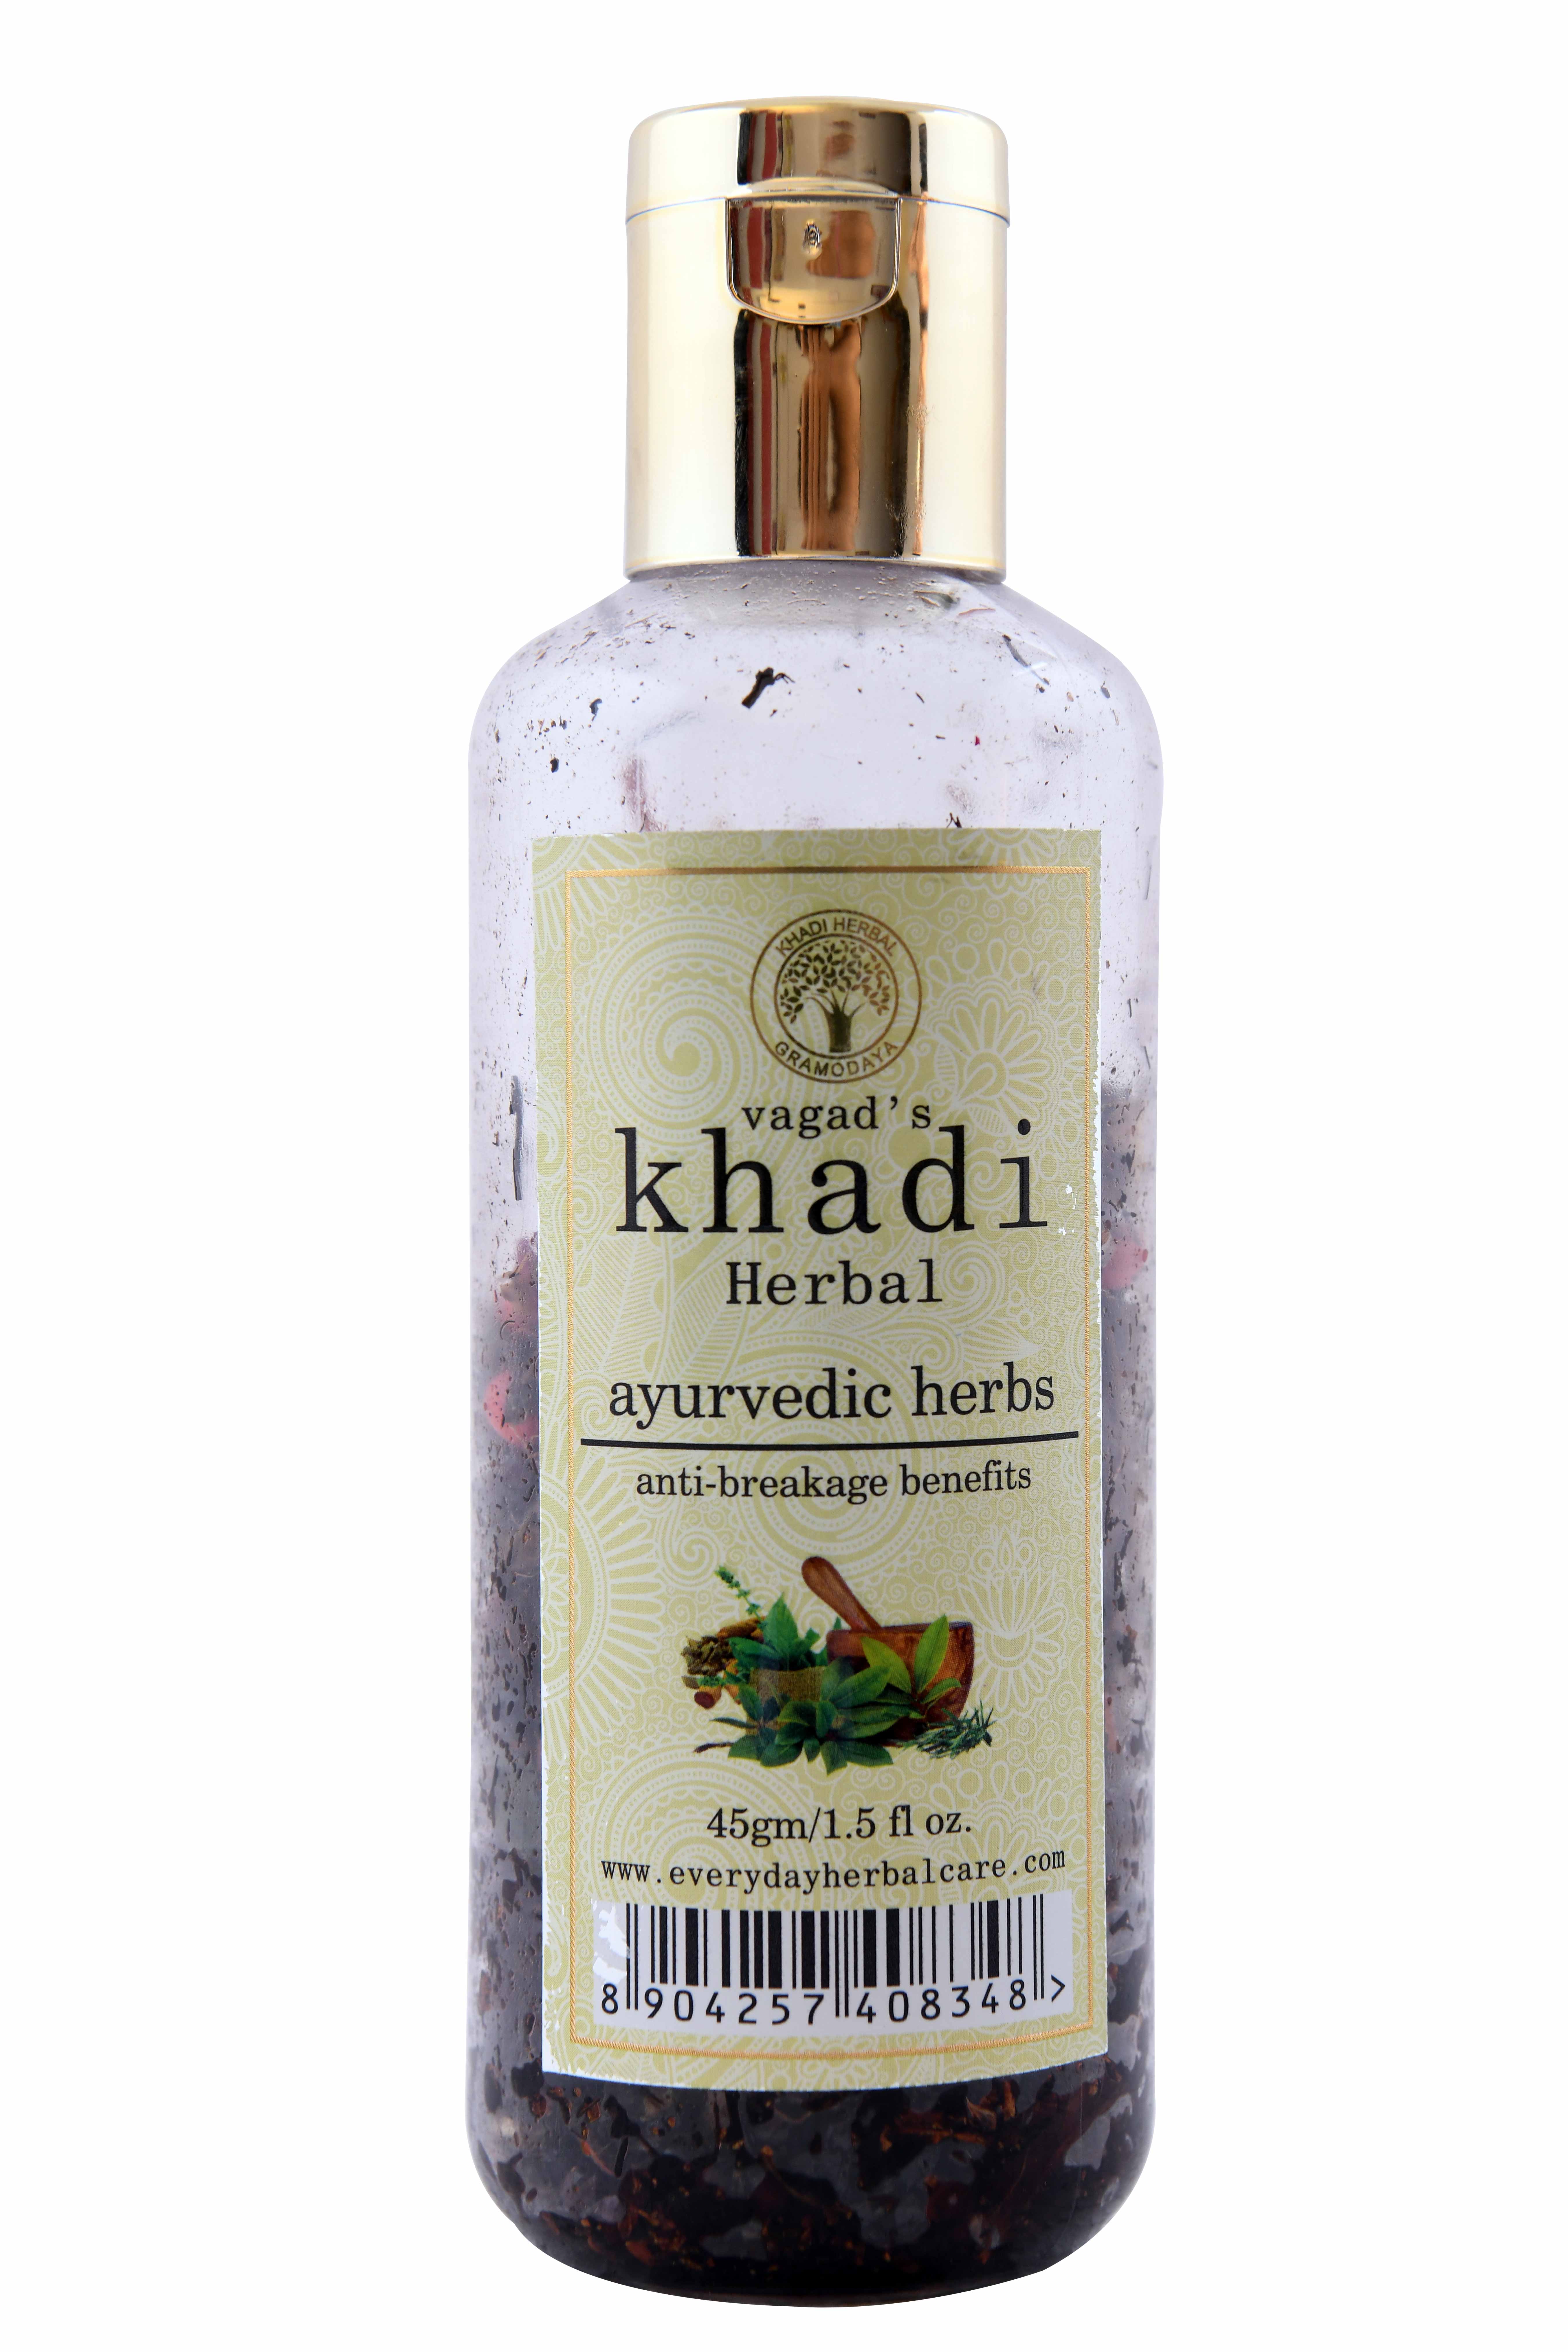 Buy Vagad's Khadi Ayurvedic Herbs at Best Price Online